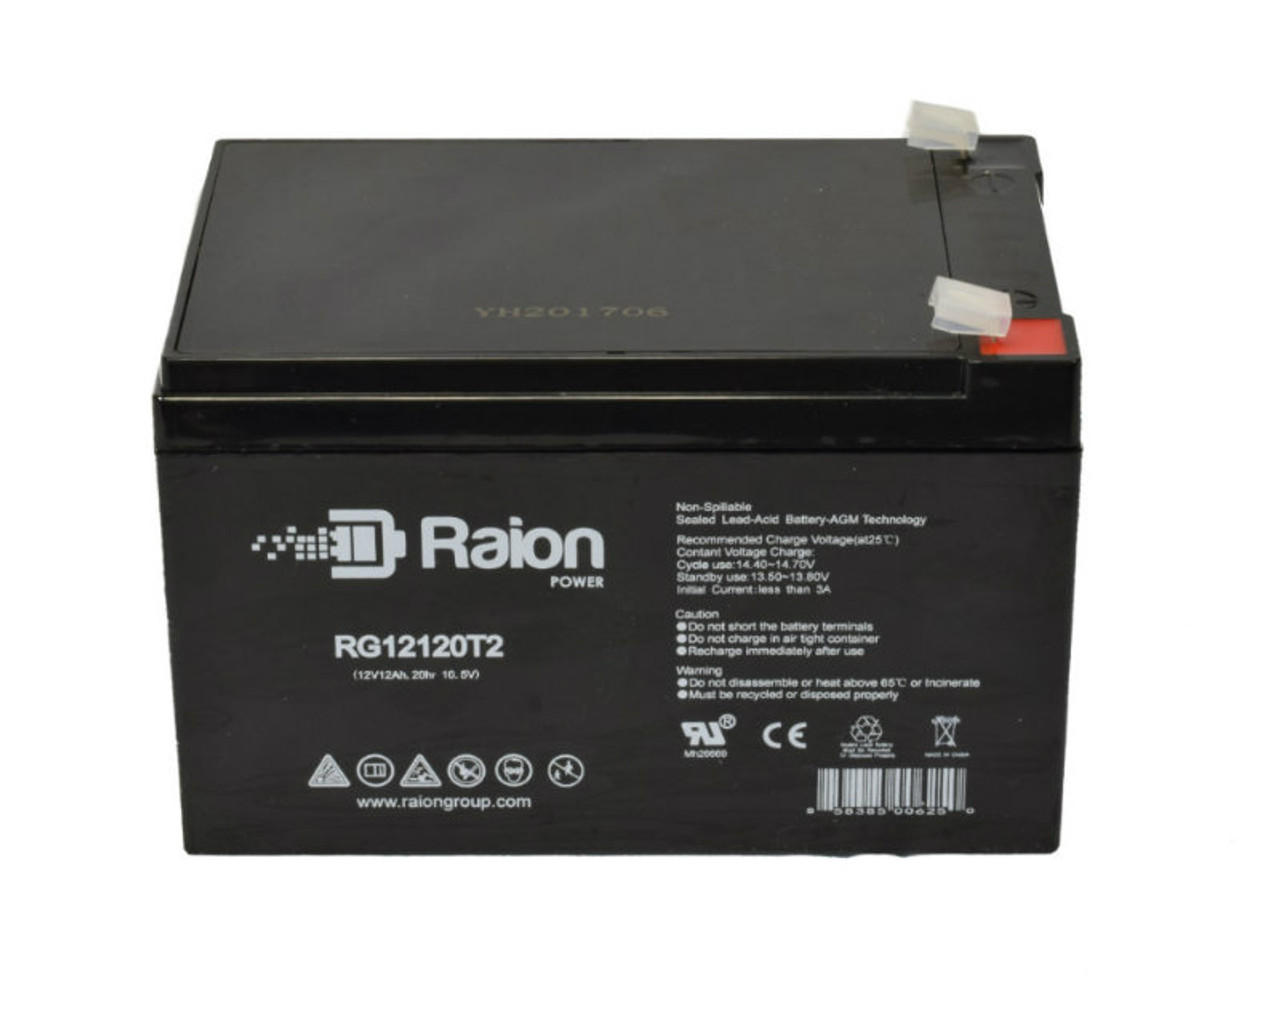 Raion Power RG12120T2 SLA Battery for Prince Portable Model 3